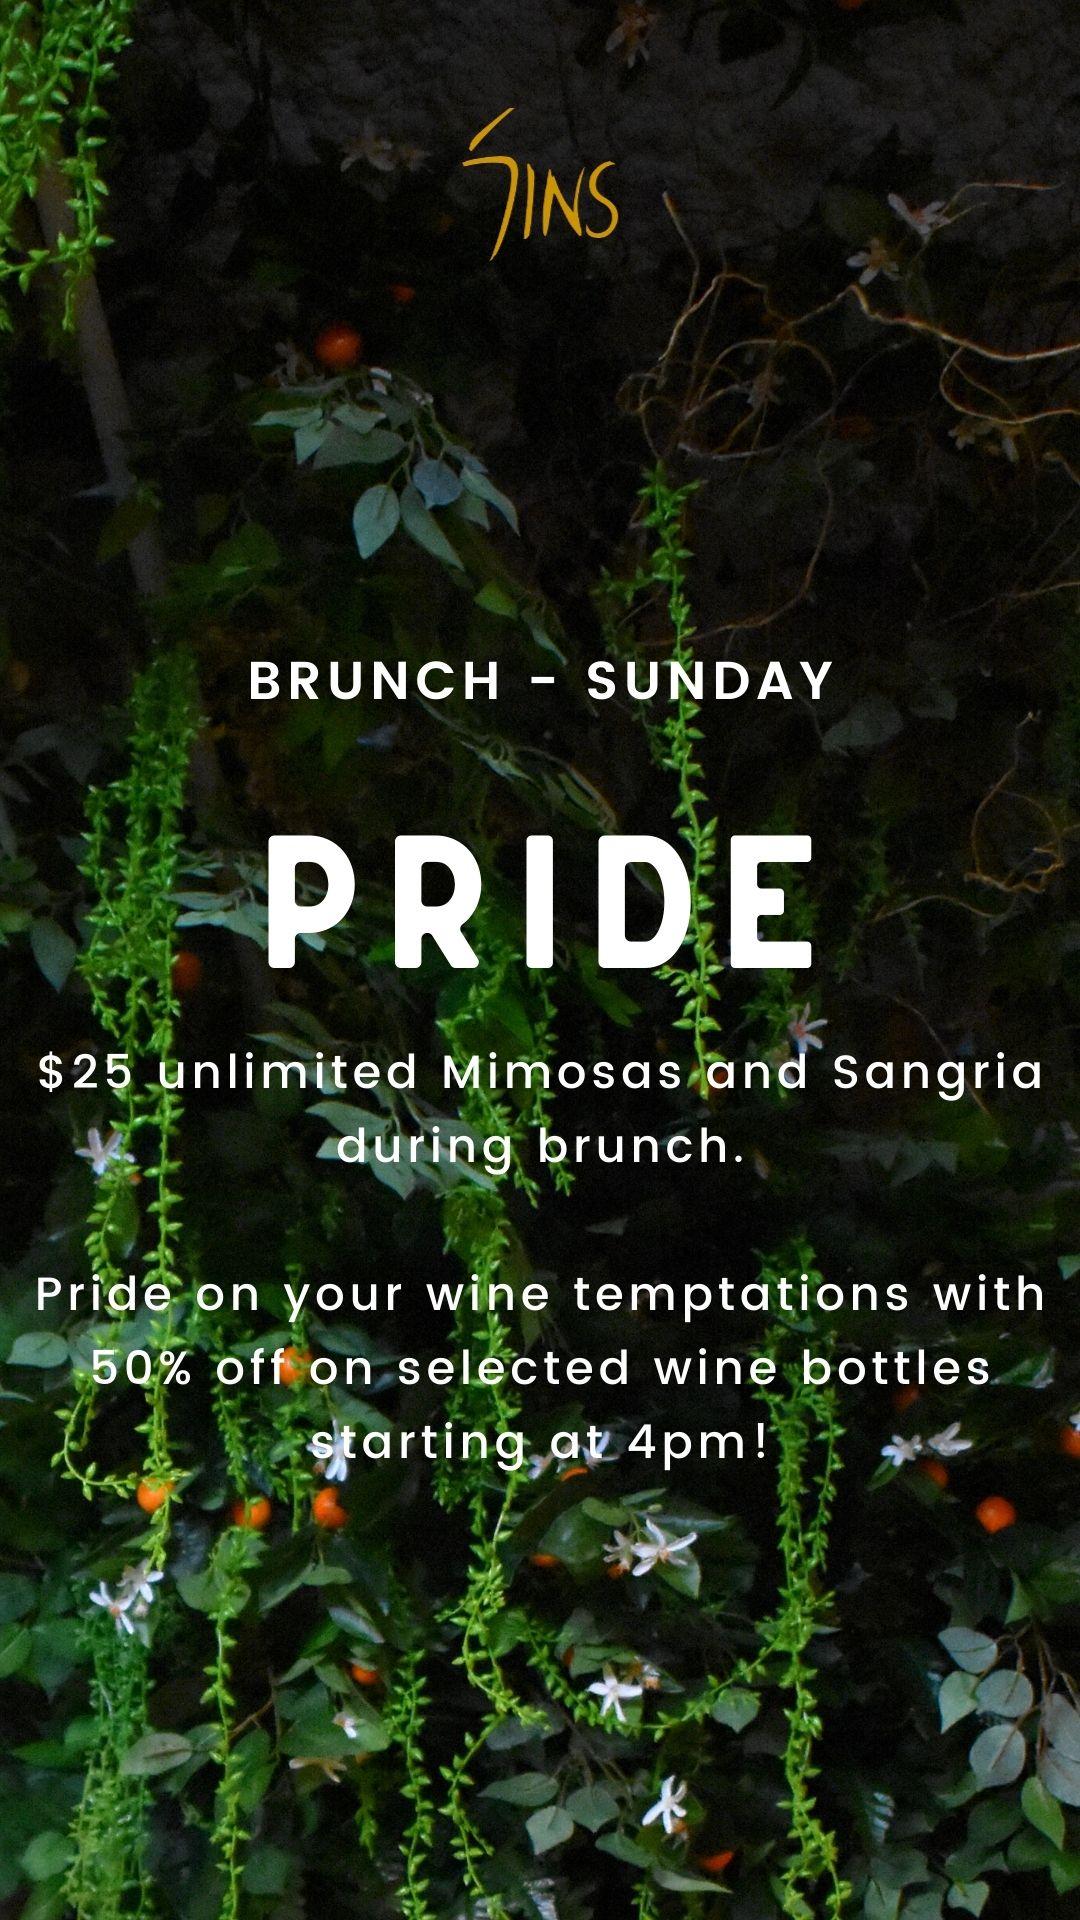 Sunday: Brunch & Wine Temptation Night